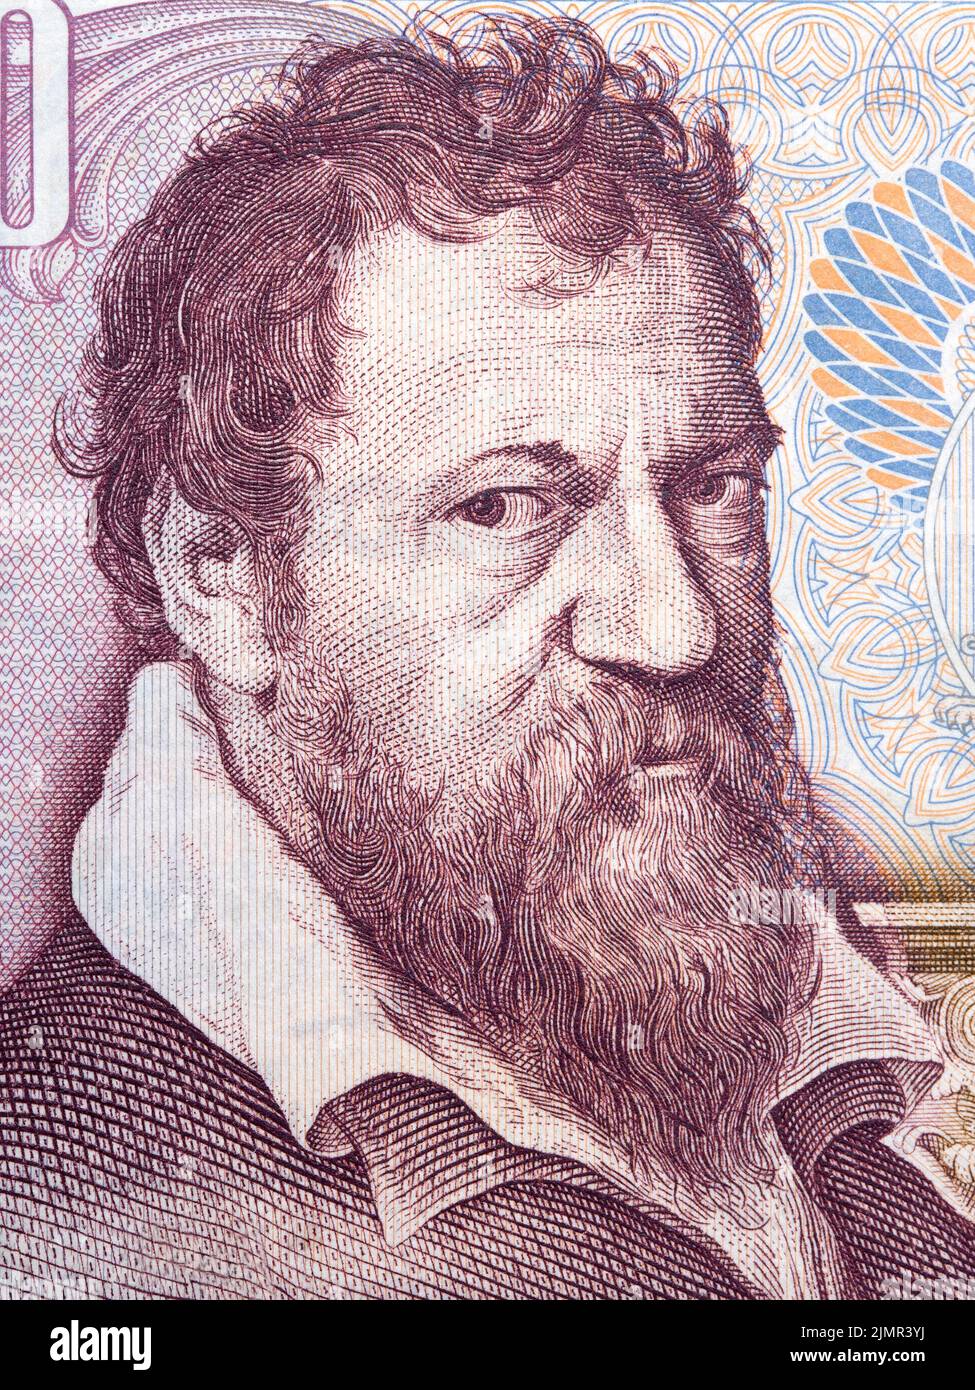 Lambert Lombard portrait from Belgian money Stock Photo